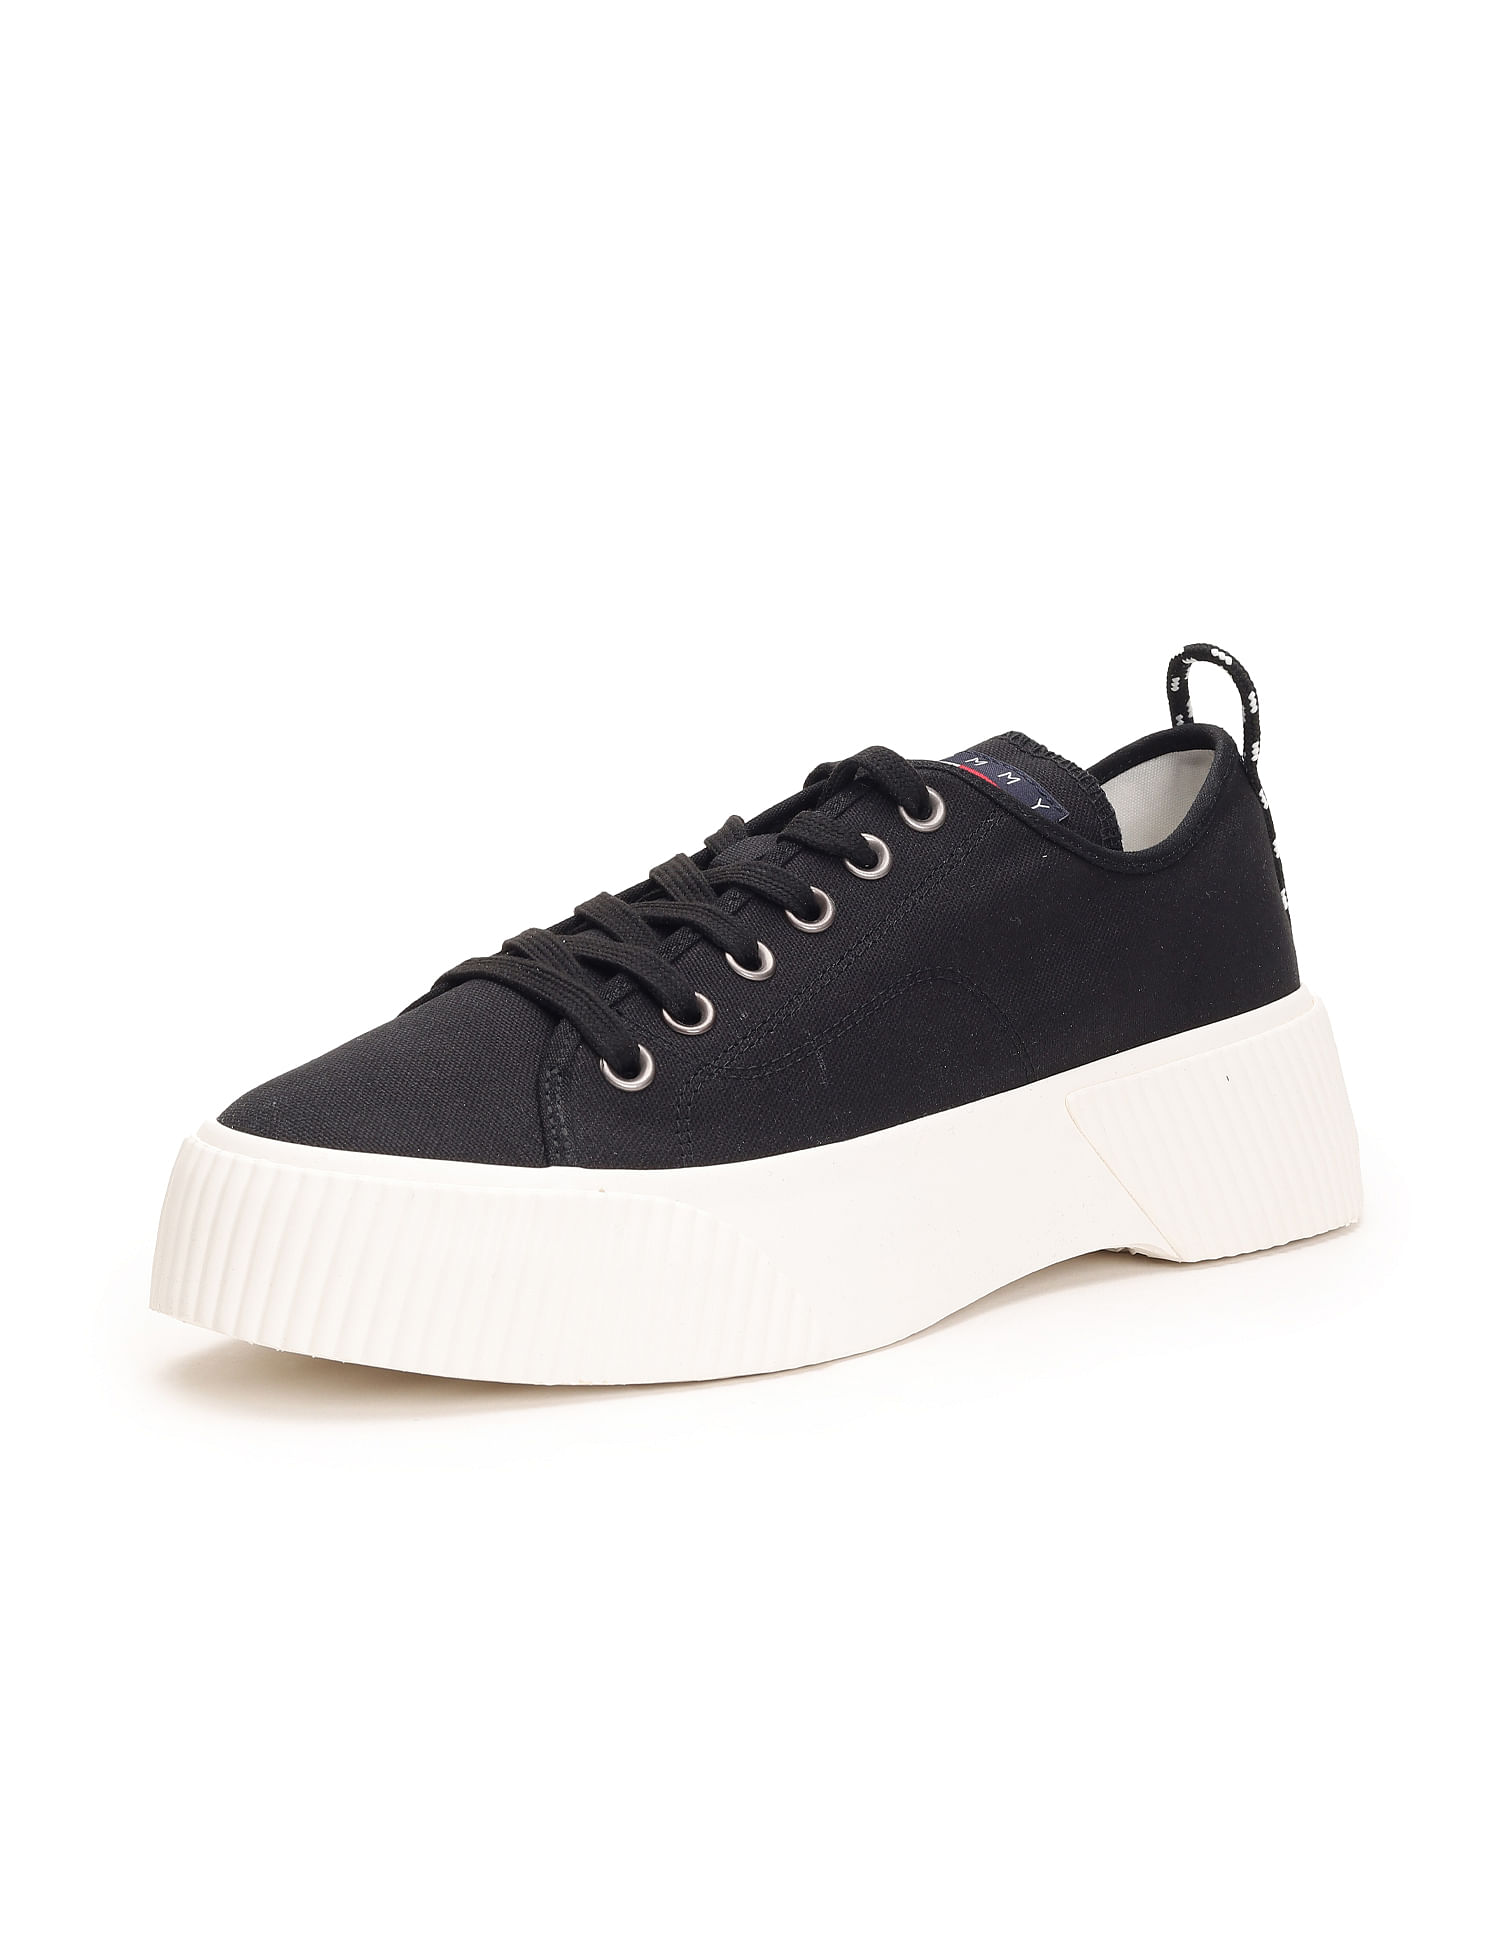 Buy Tommy Hilfiger Men anised Platform Sneakers - NNNOW.com